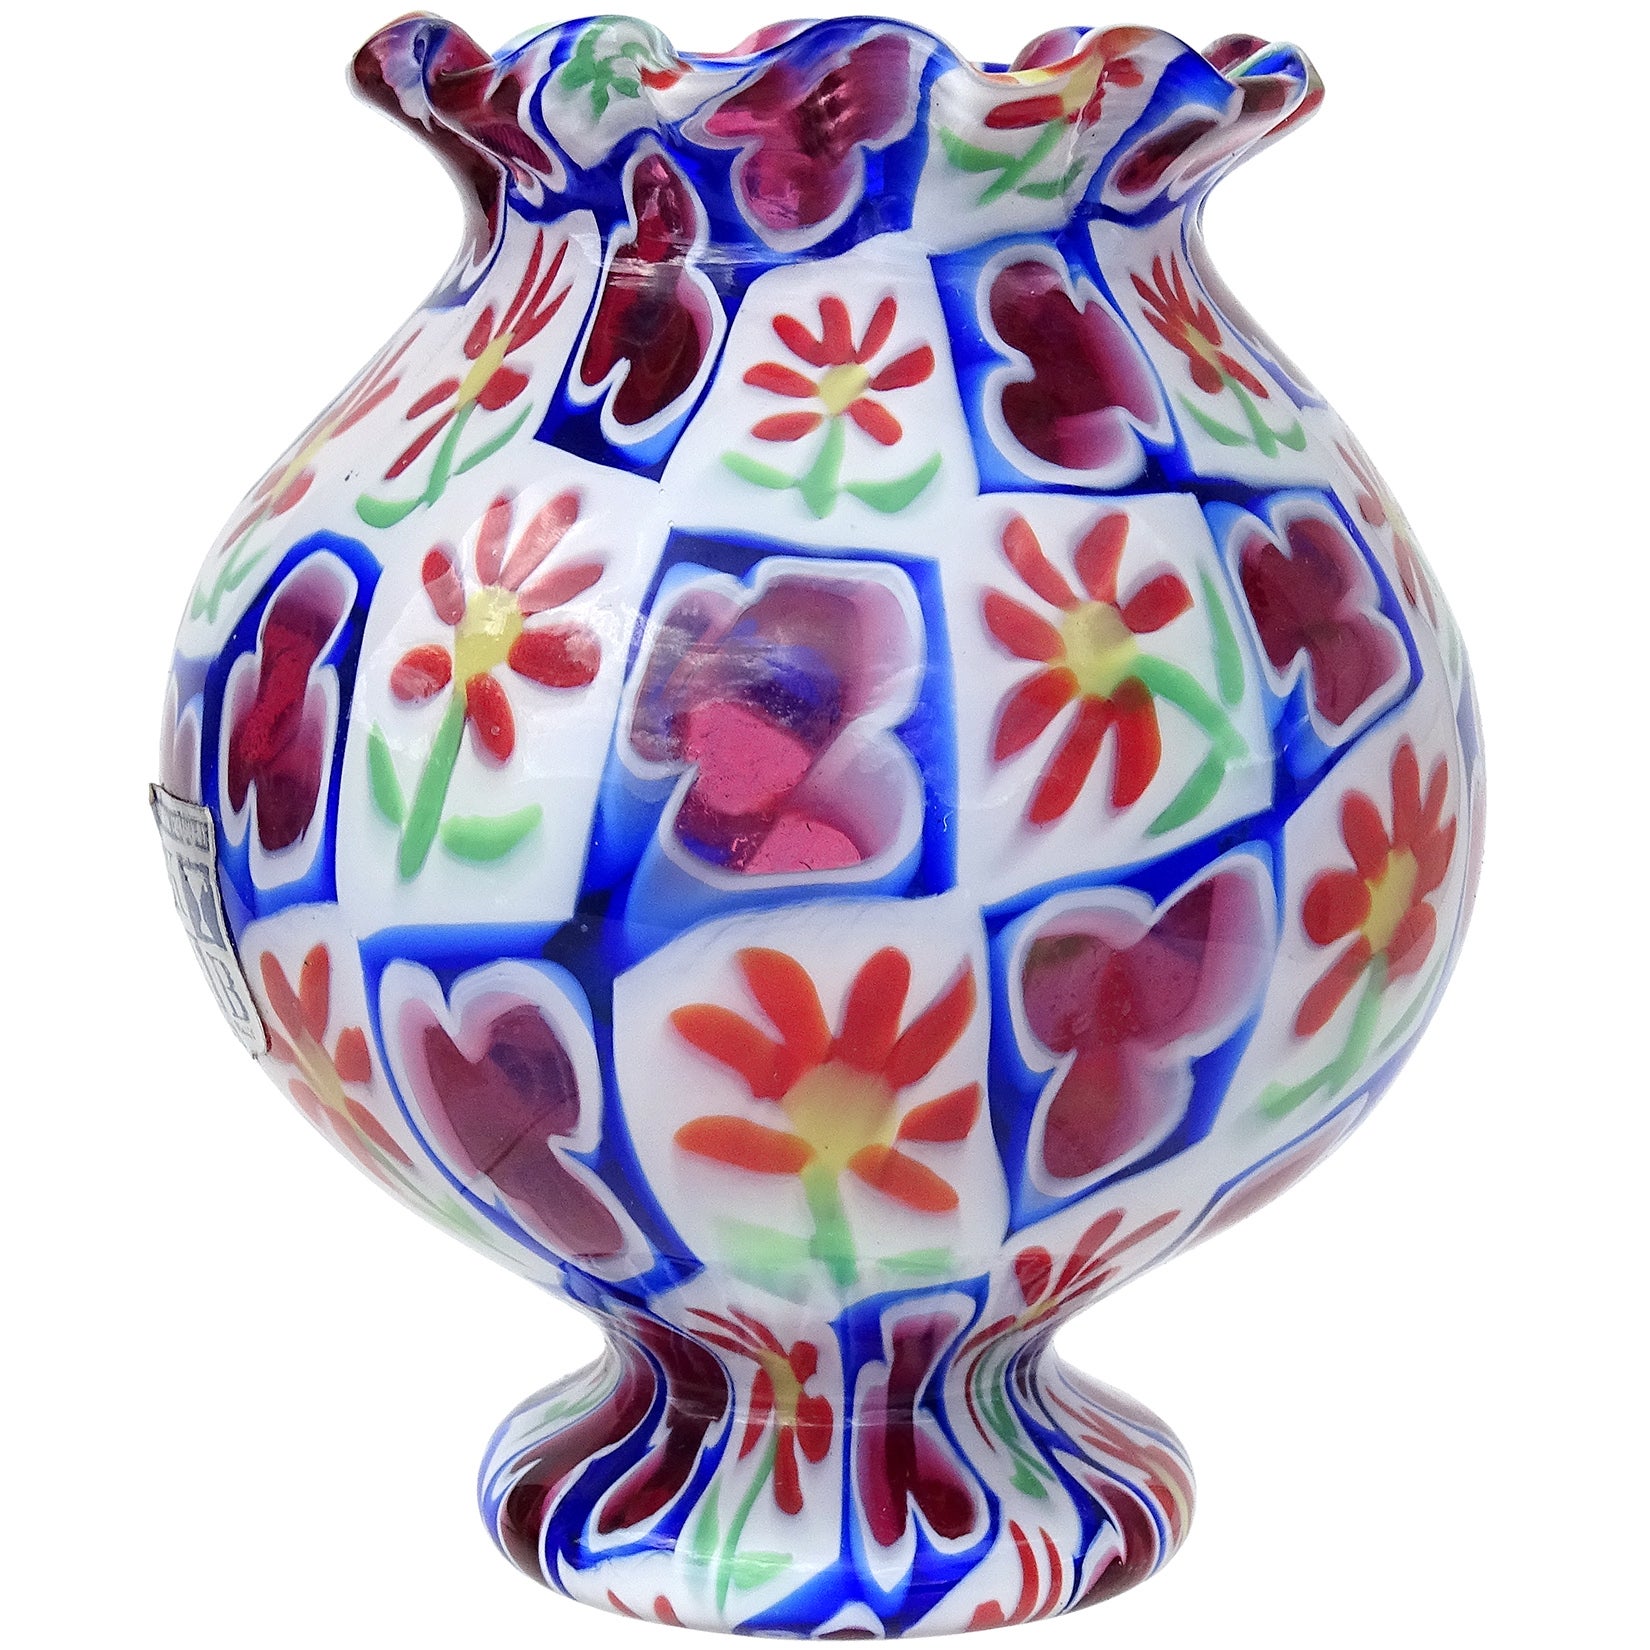 Toso Murano Millefiori Daisy Clover Flower Mosaic Italian Art Glass Footed Vase